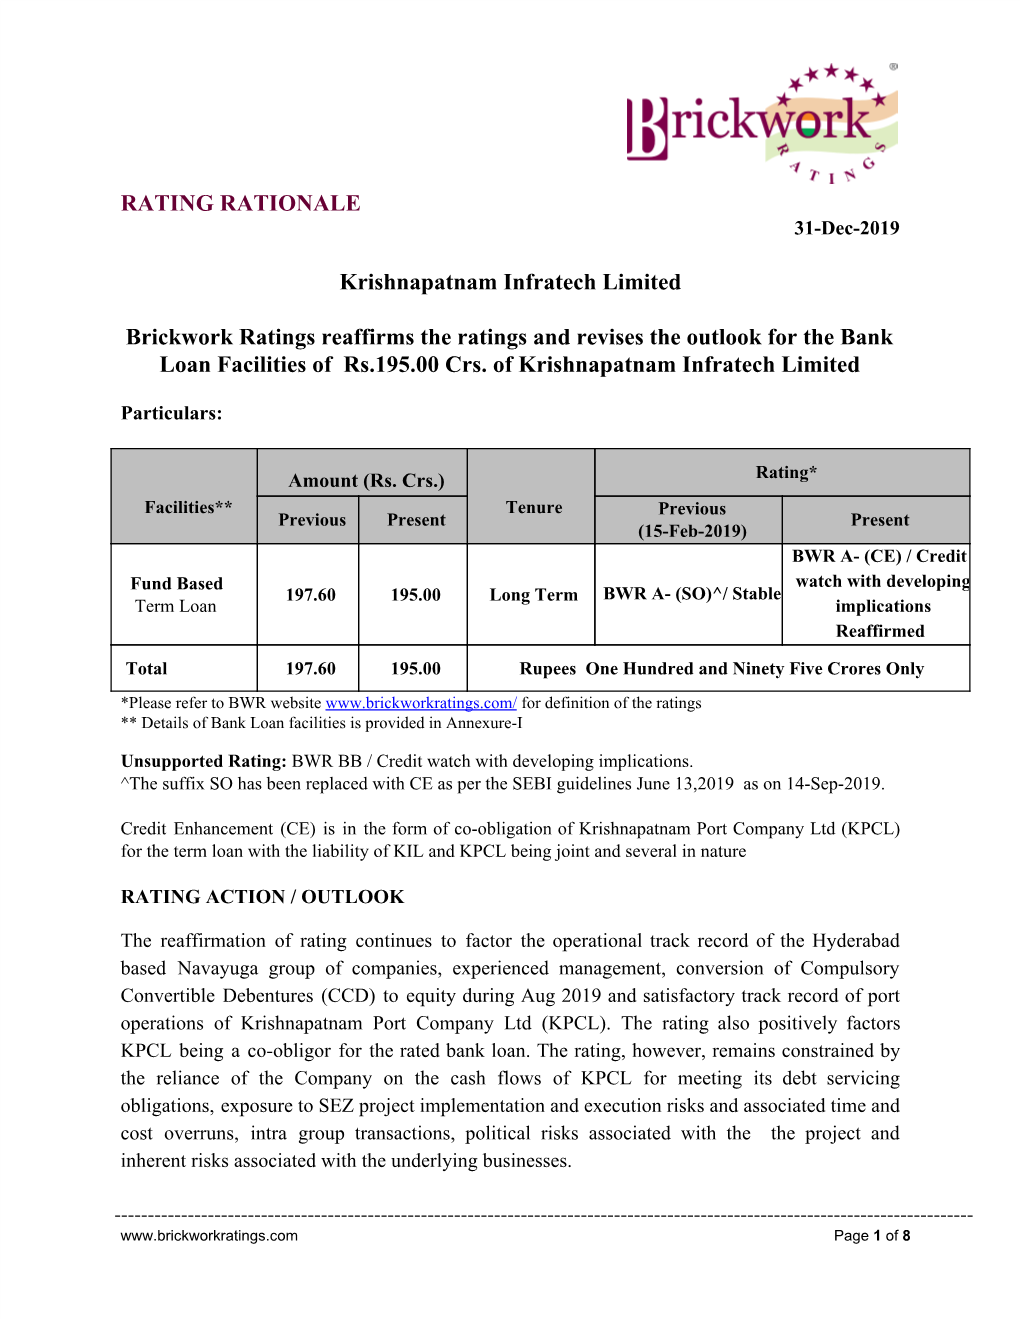 Krishnapatnam Infratech Limited Brickwork Ratings Reaffirms The